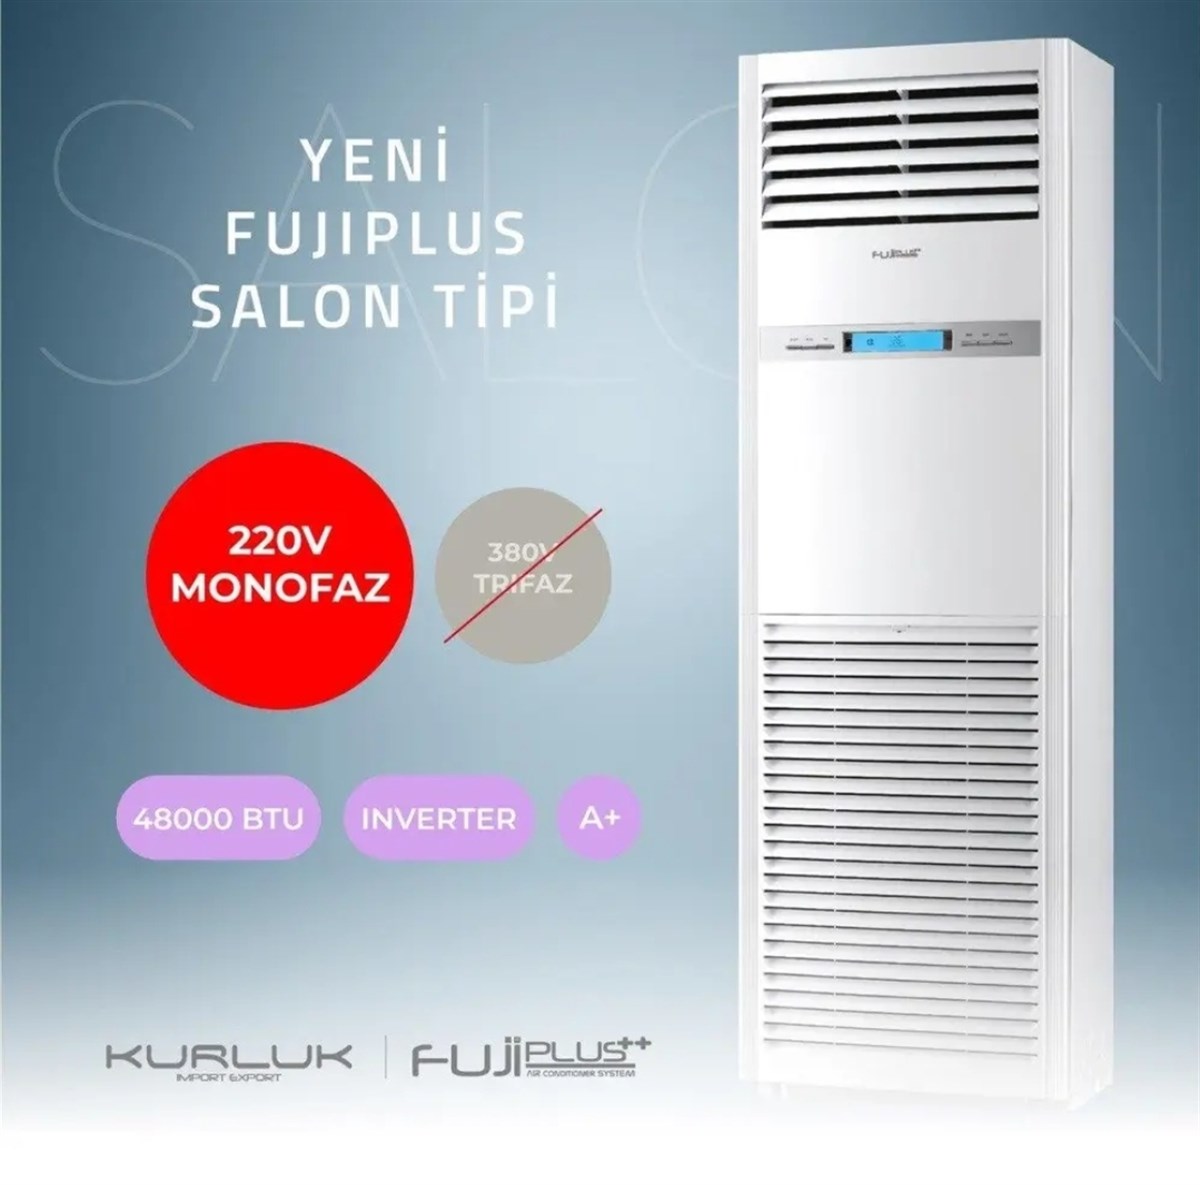 FujiPlus 48000 Btu İnverter Salon Tipi Monofaz Klima | Fırsat Bizden